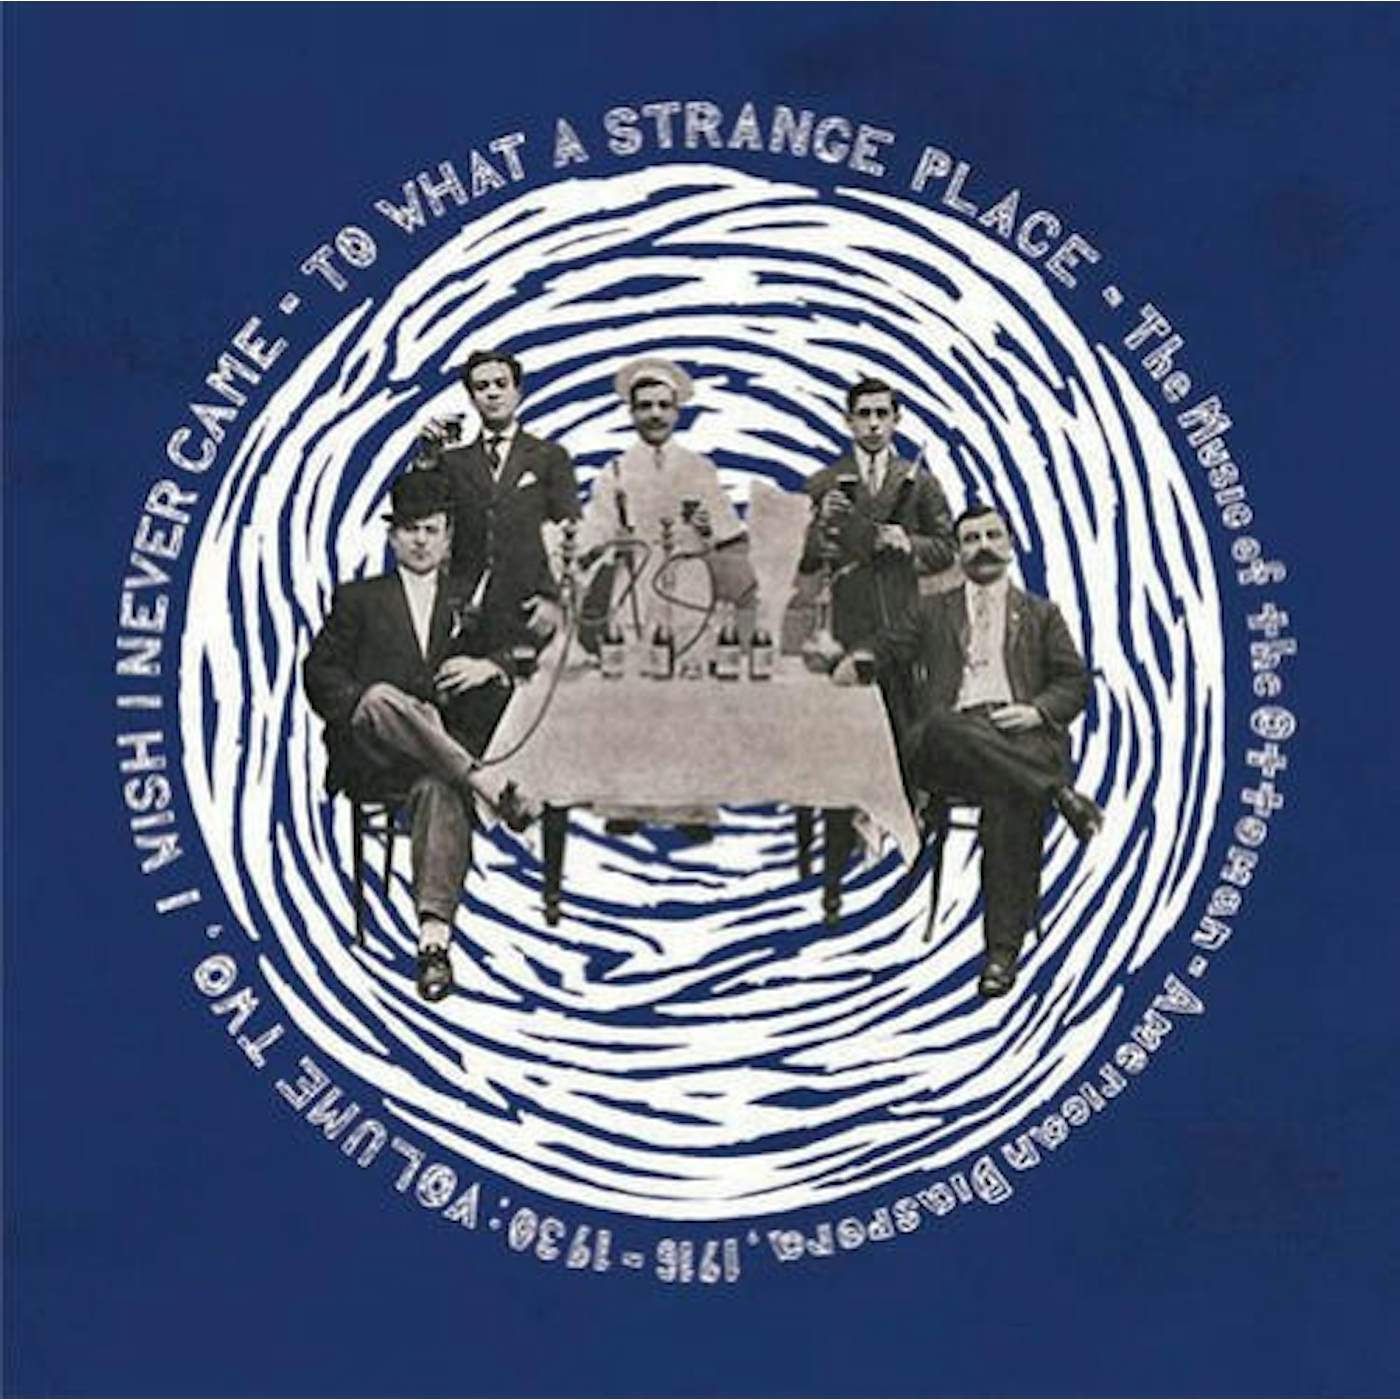 WISH I NEVER CAME: WHAT STRANGE PLACE VOL 2 / VAR Vinyl Record